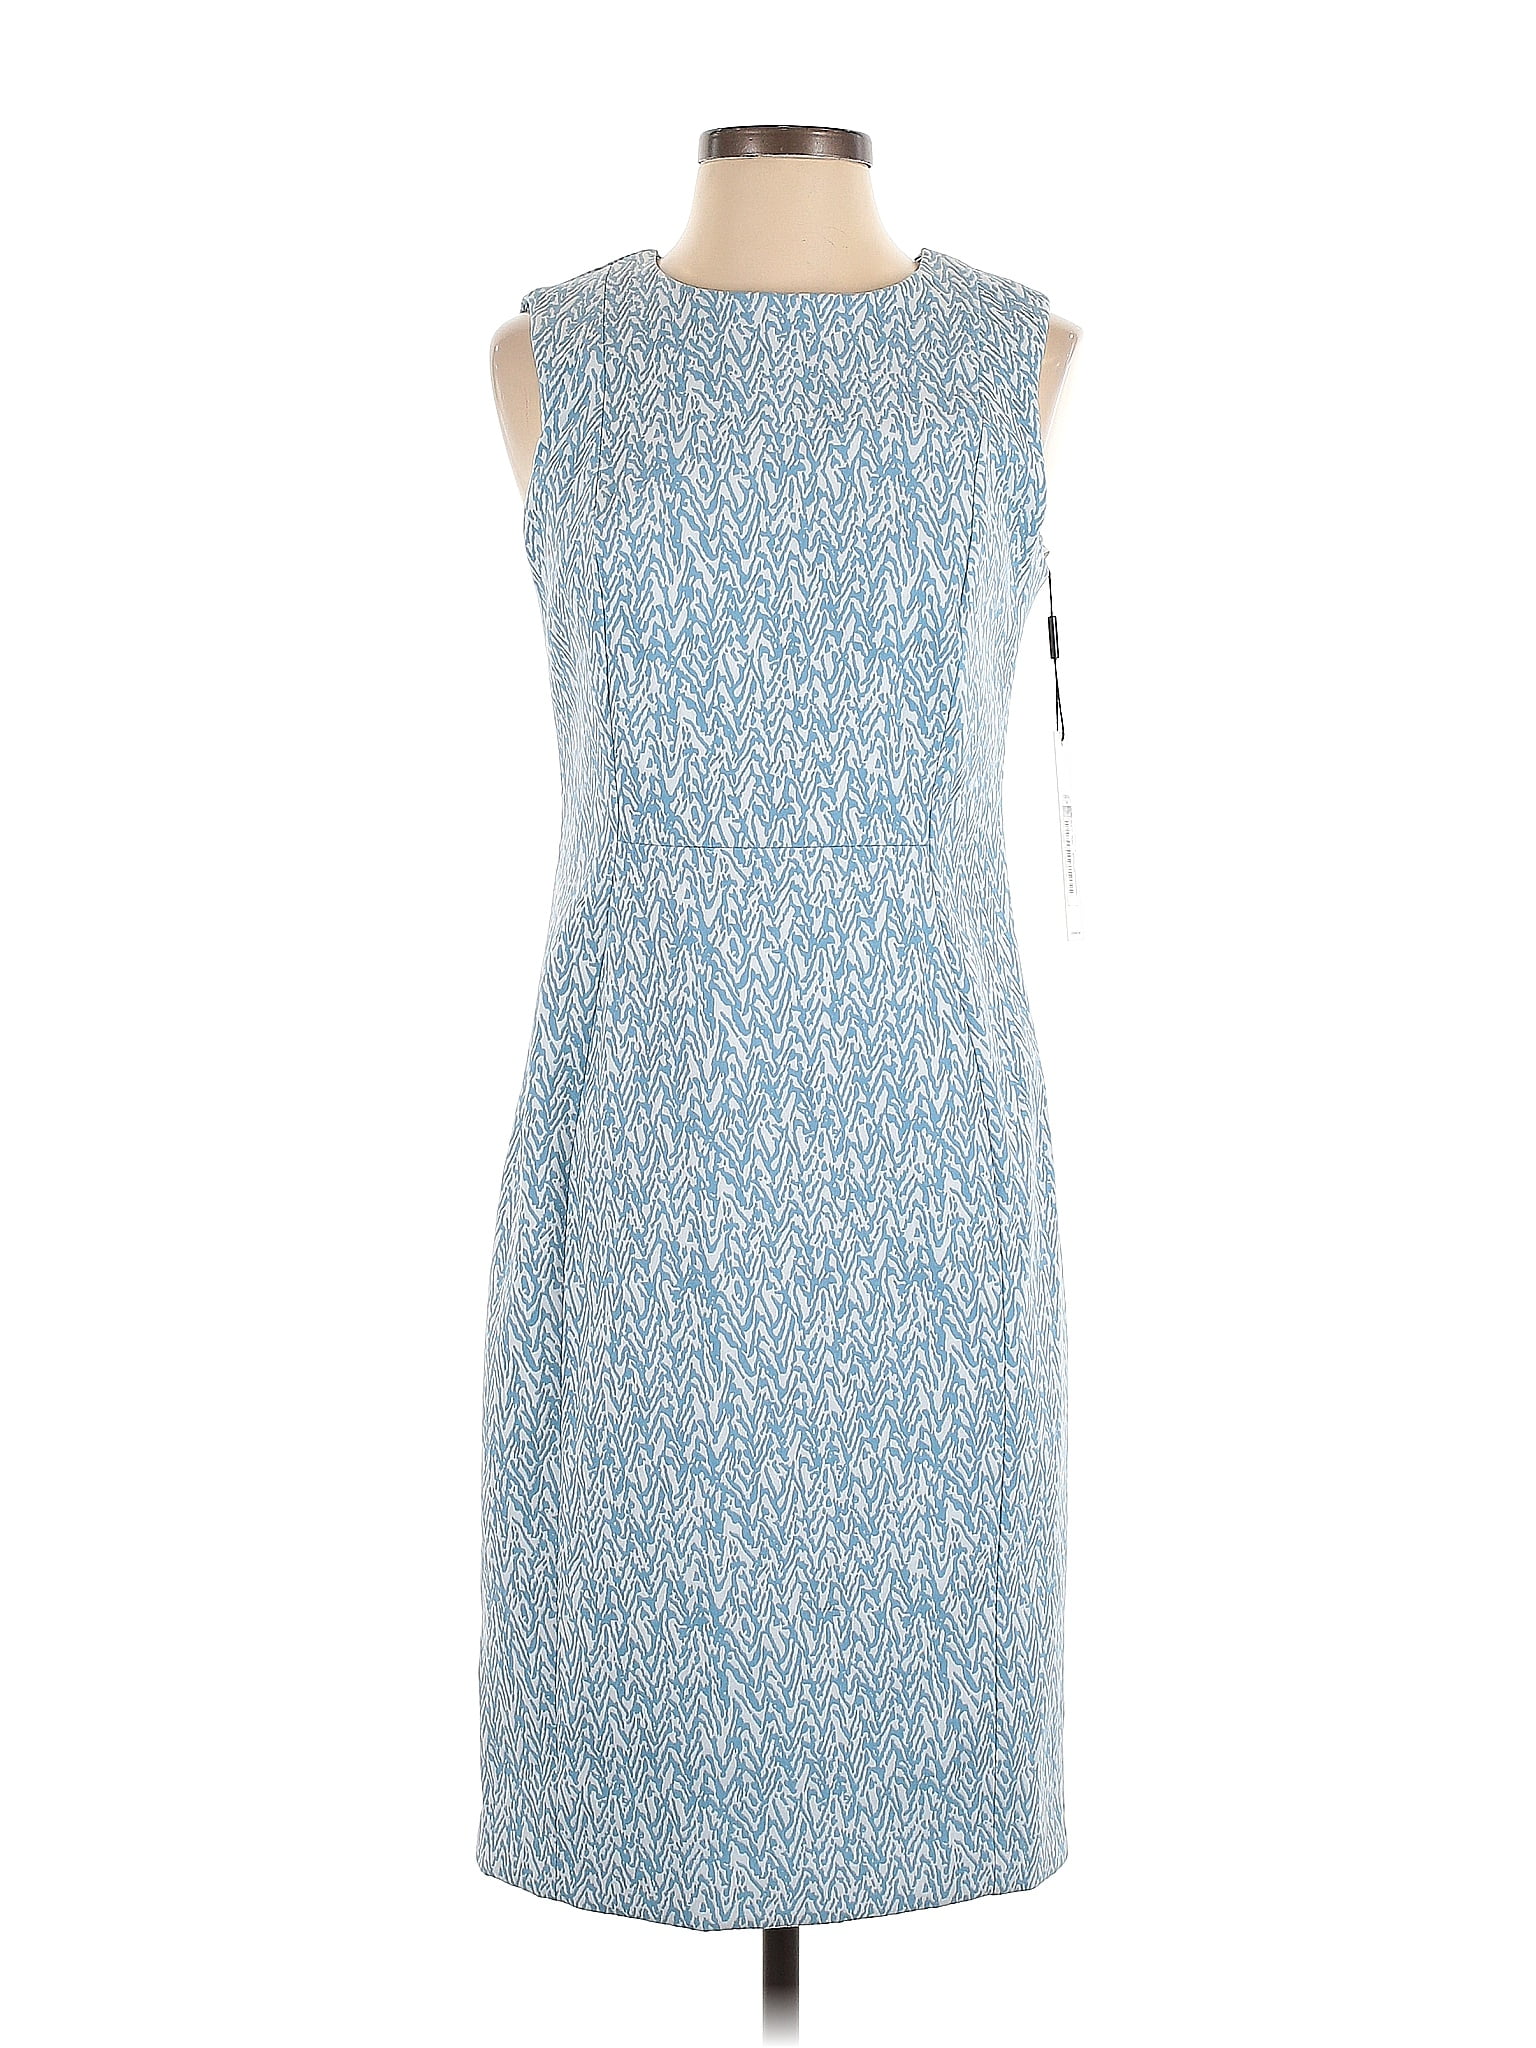 Calvin Klein Blue Casual Dress Size 6 - 69% off | thredUP